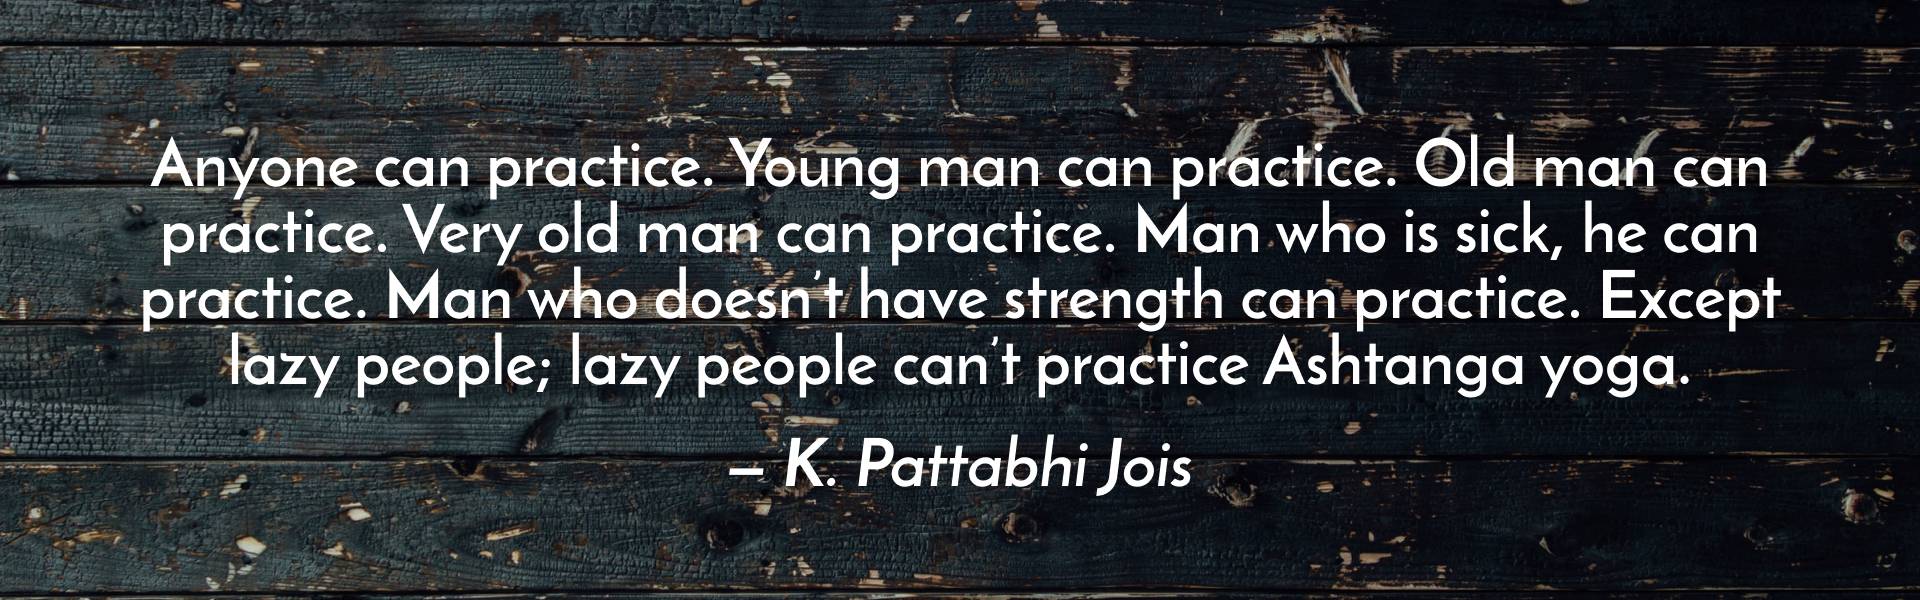 Anyone can practice — K. Pattabhi Jois